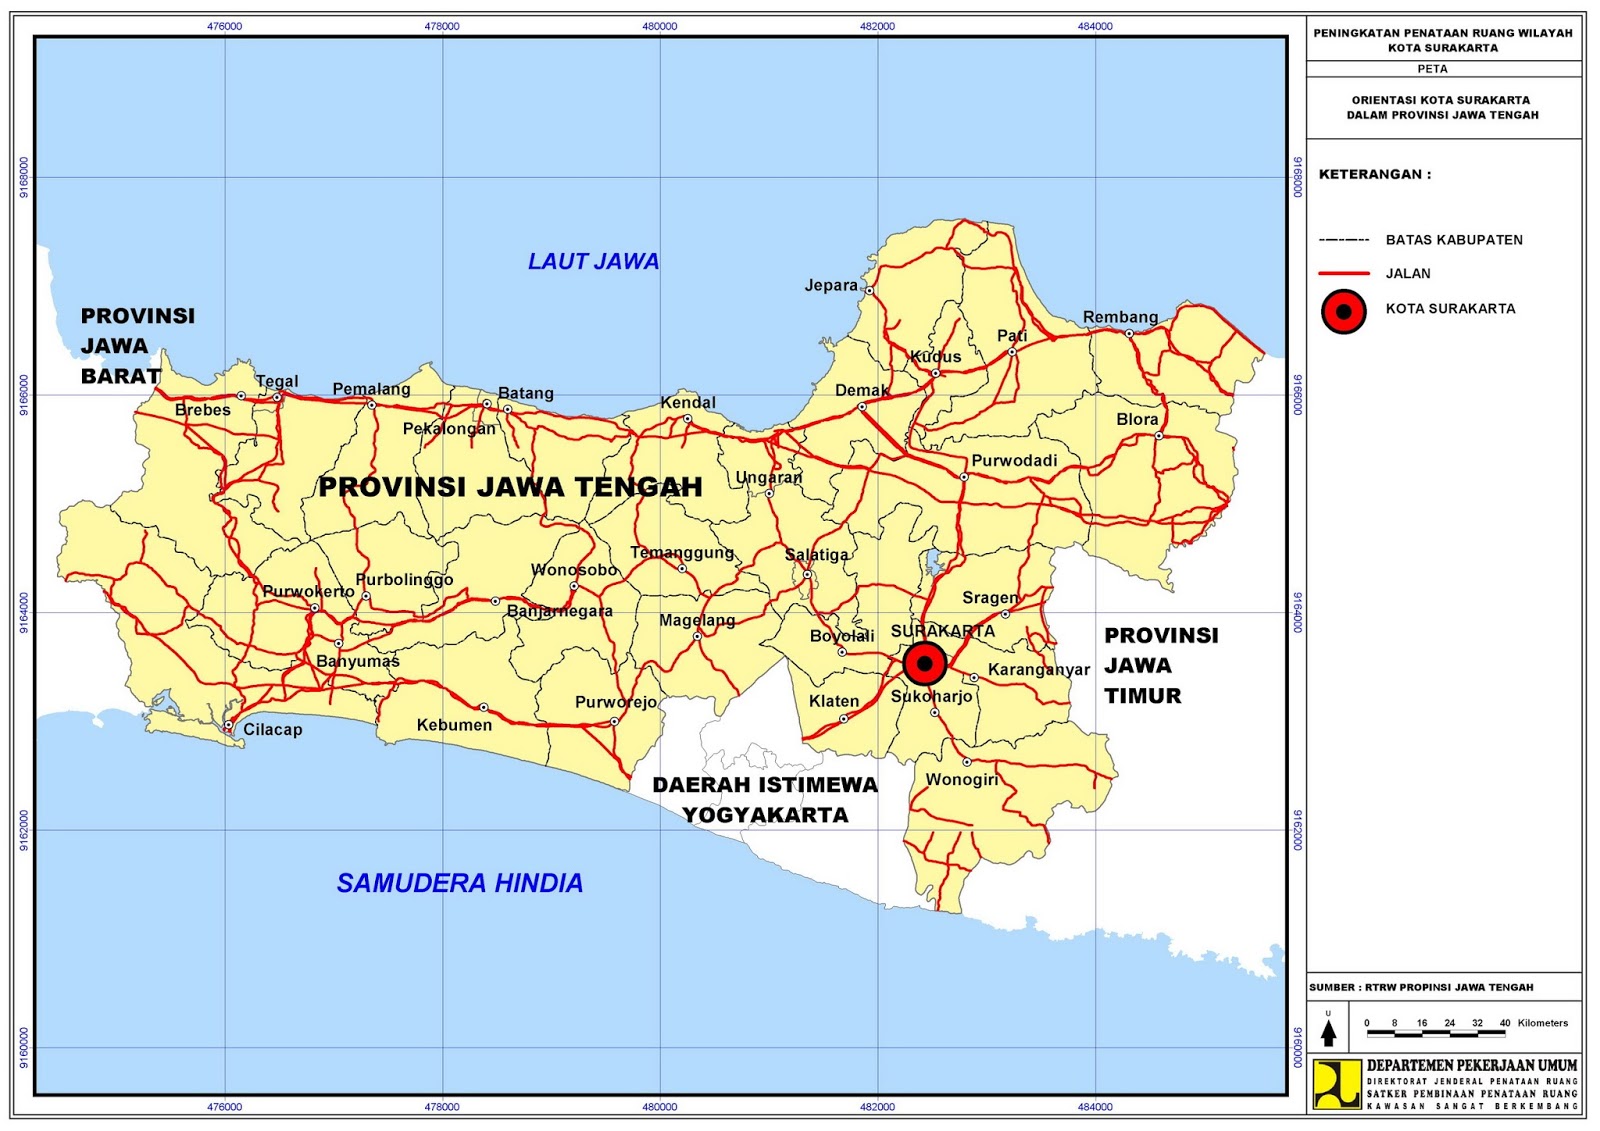  Peta Lengkap Indonesia Peta Orientasi Kota Surakarta 